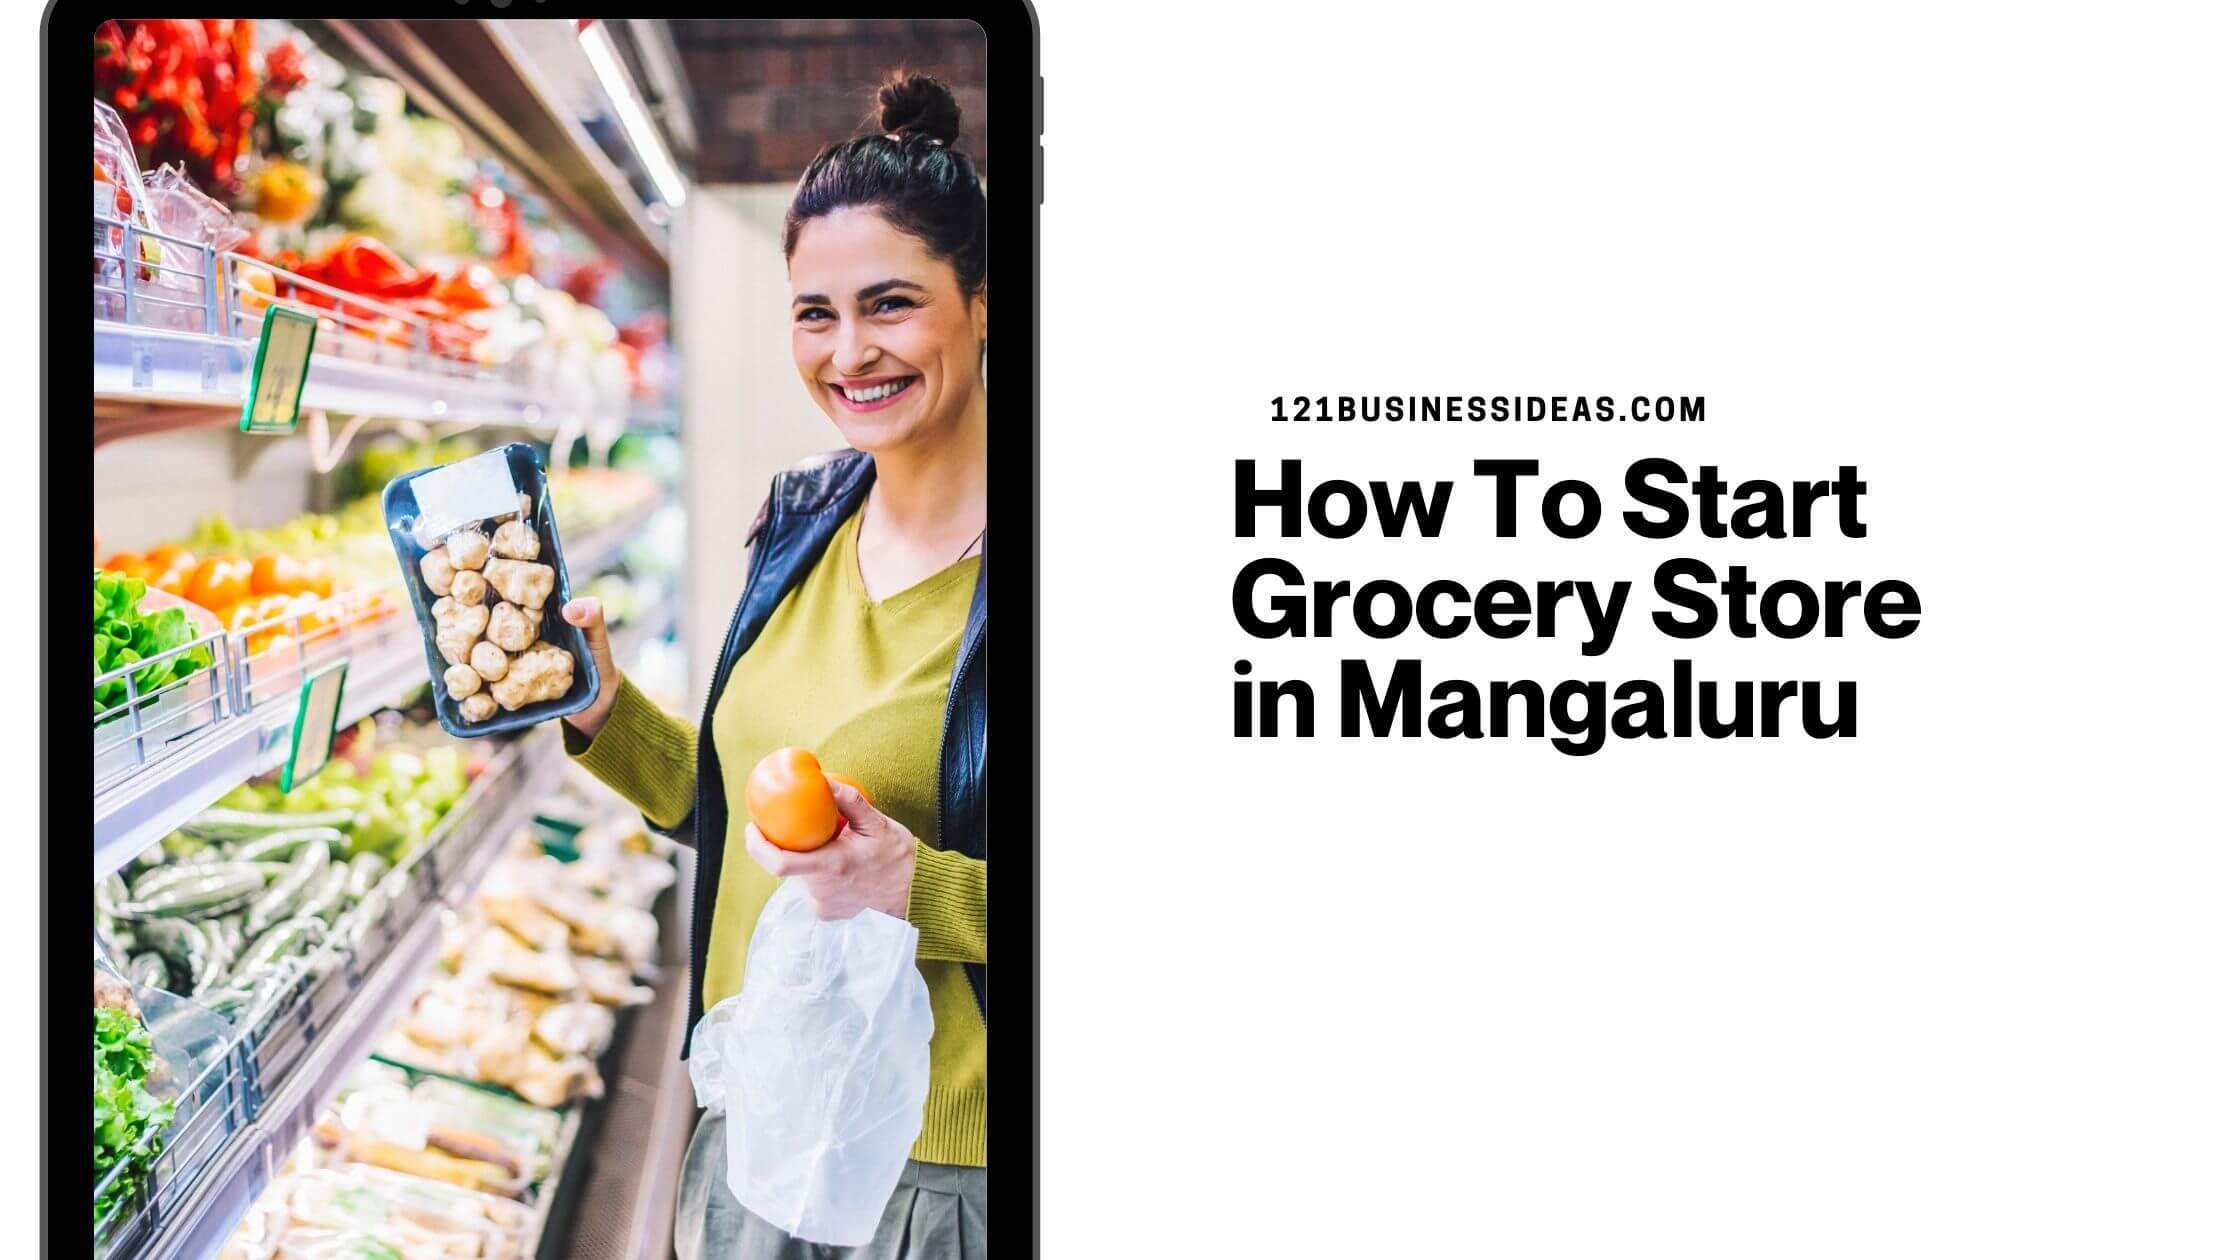 How To Start Grocery Store in Mangaluru (1) (1)